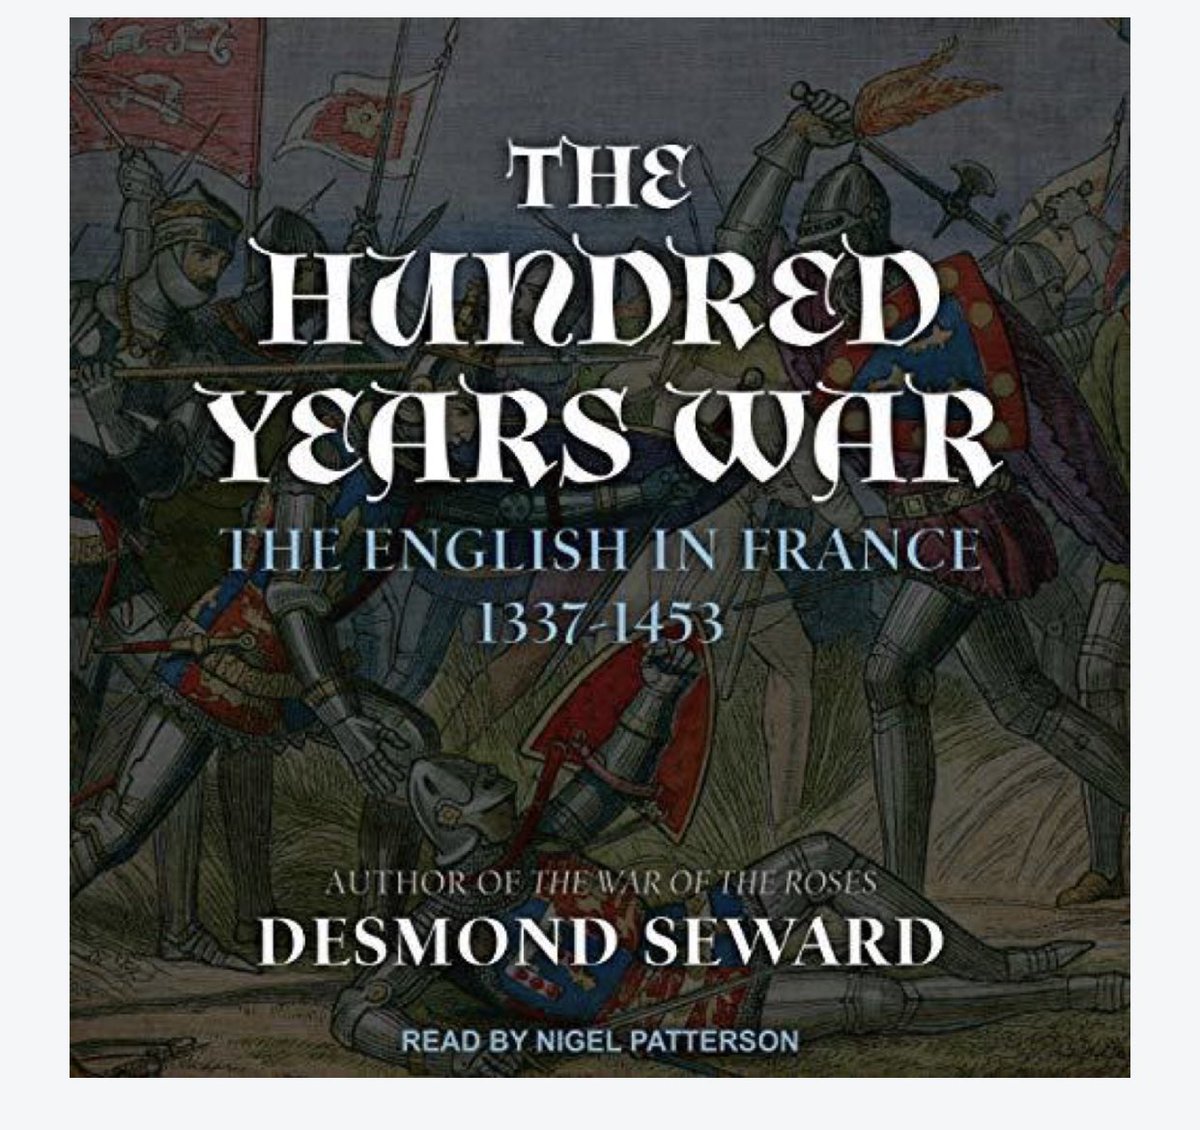 It’s Desmond Seward’s The Hundred Years War.